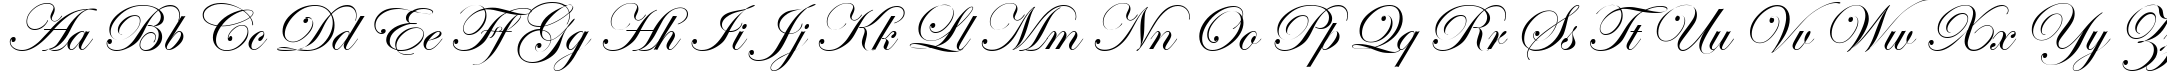 Пример написания английского алфавита шрифтом Edwardian Scr Alt ITC TT